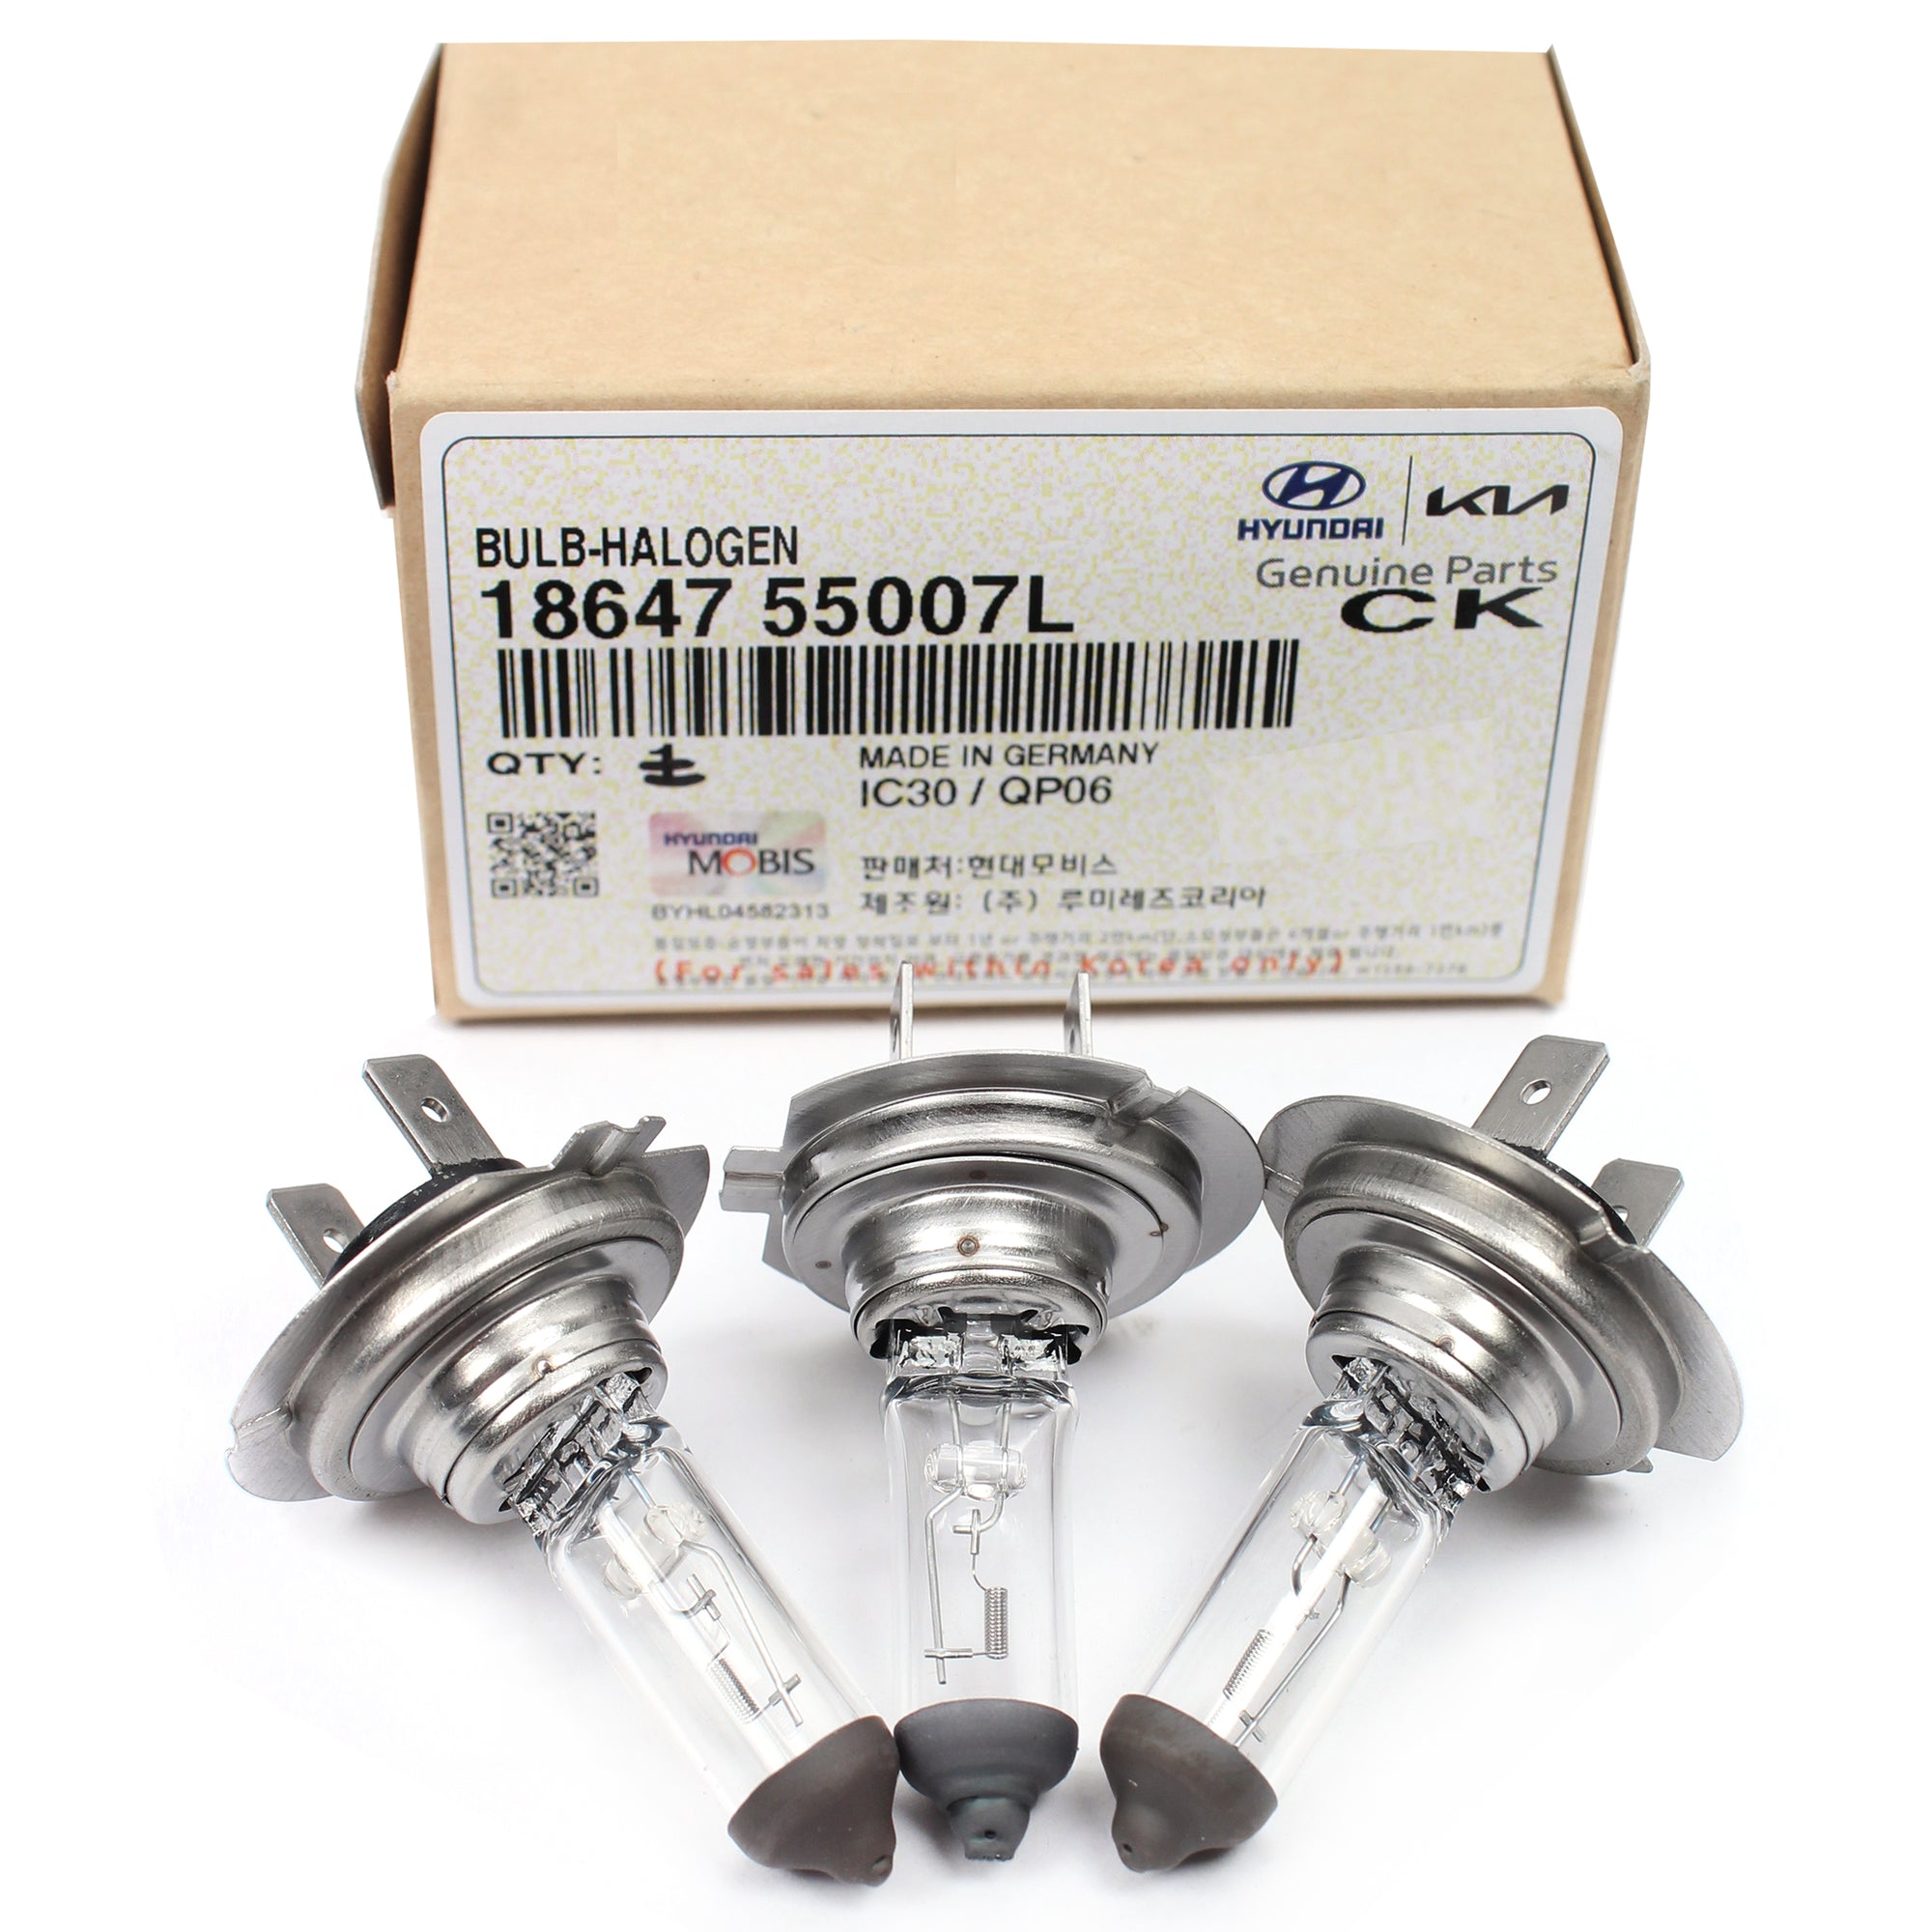 GENUINE Headlight Bulbs 3PCS H7 for 1999-2023 Hyundai Kia Check Compatibility 1864755007